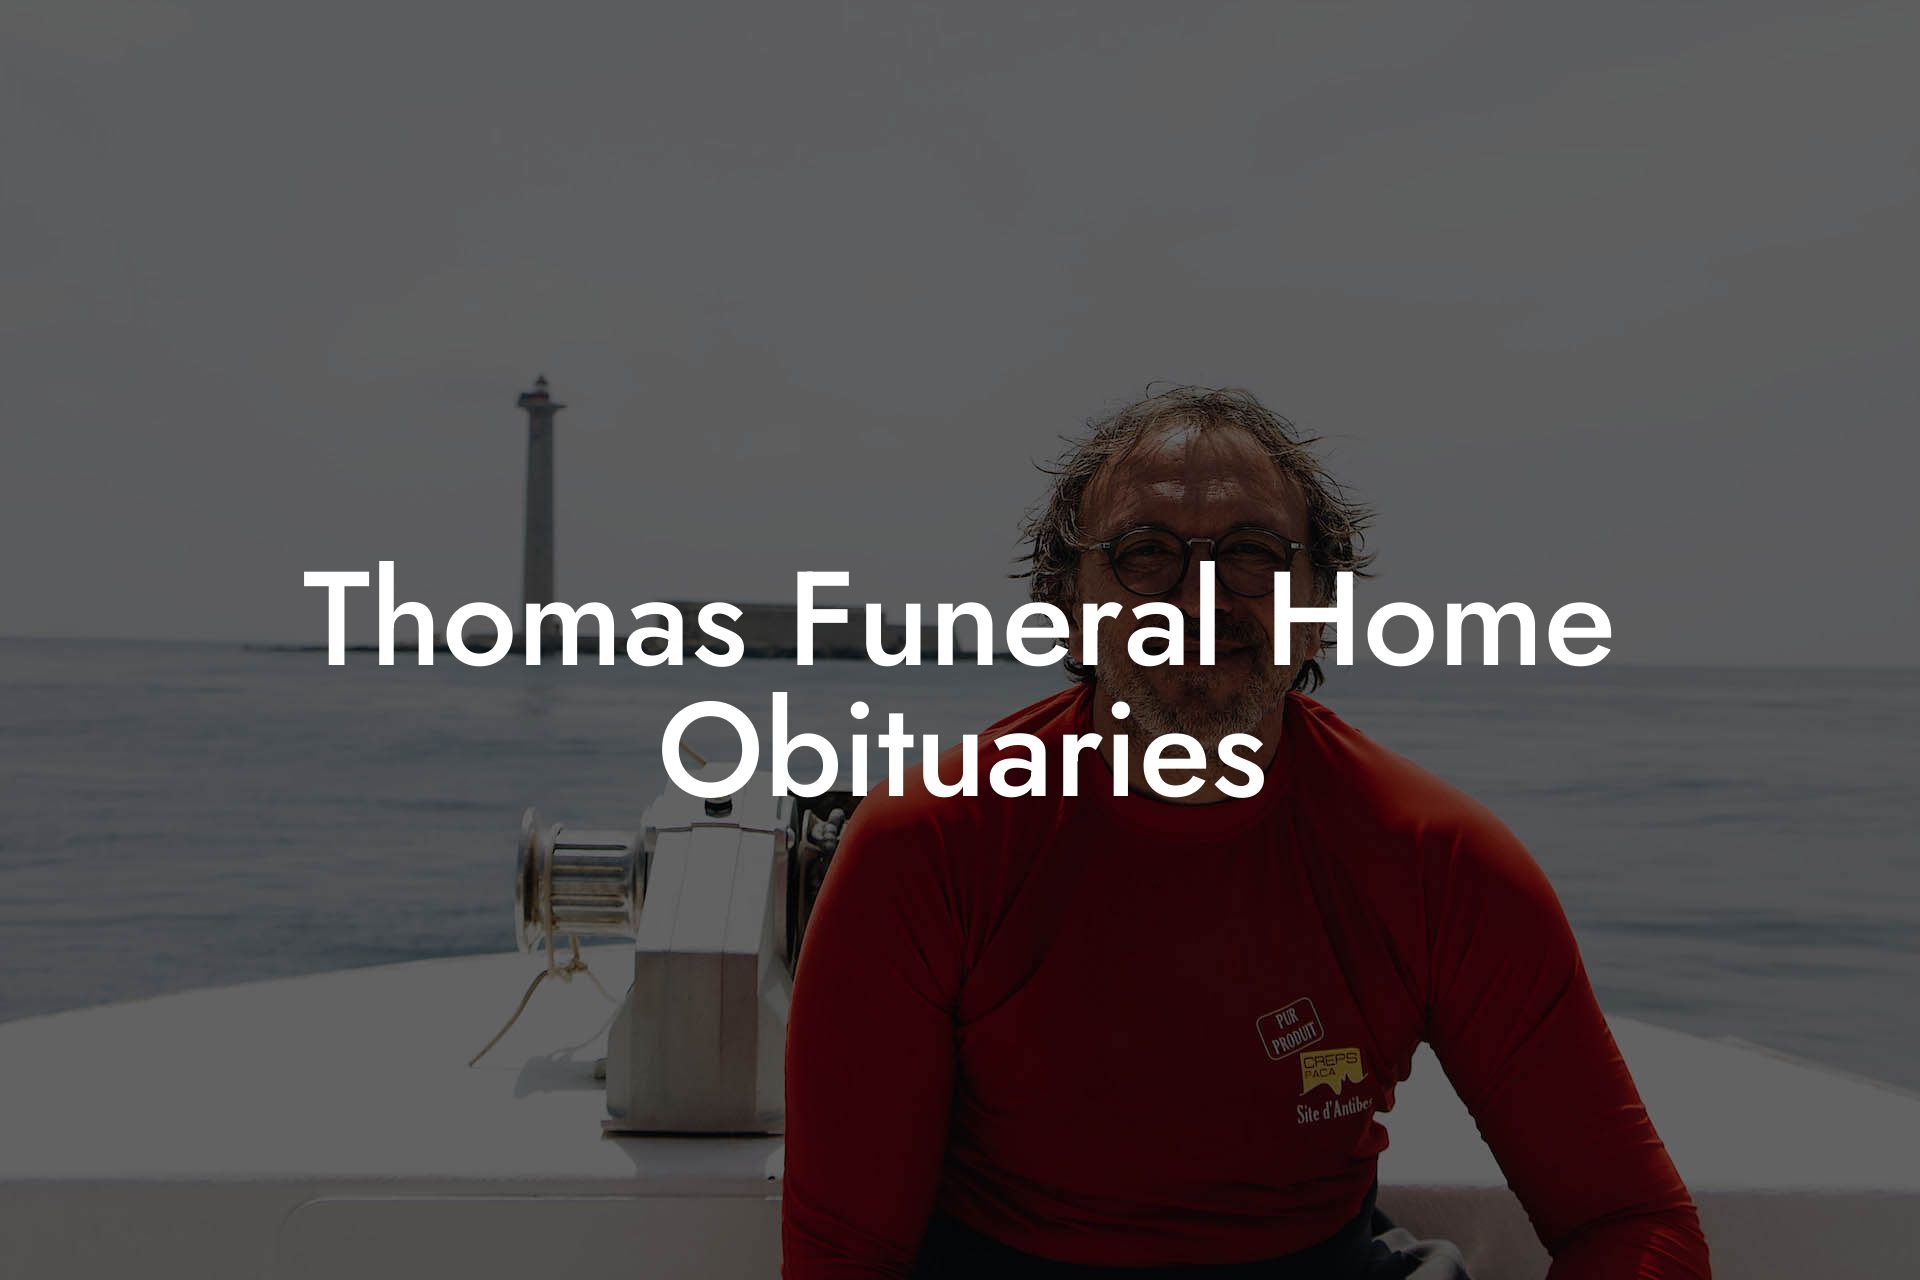 Thomas Funeral Home Obituaries